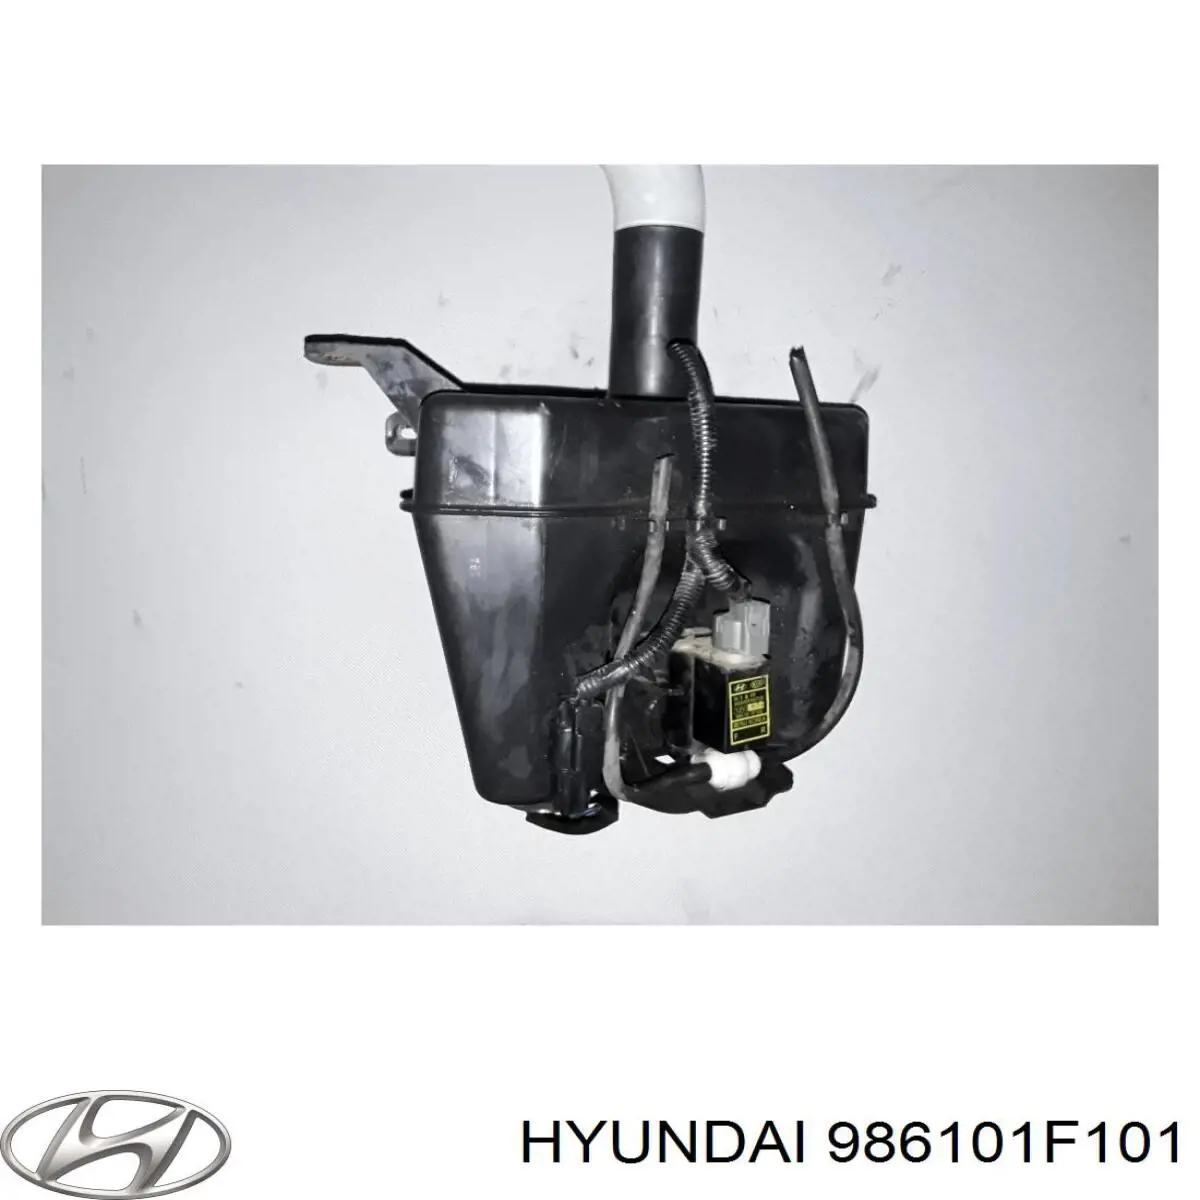 986101F101 Hyundai/Kia tanque de fluido para lavador de vidro